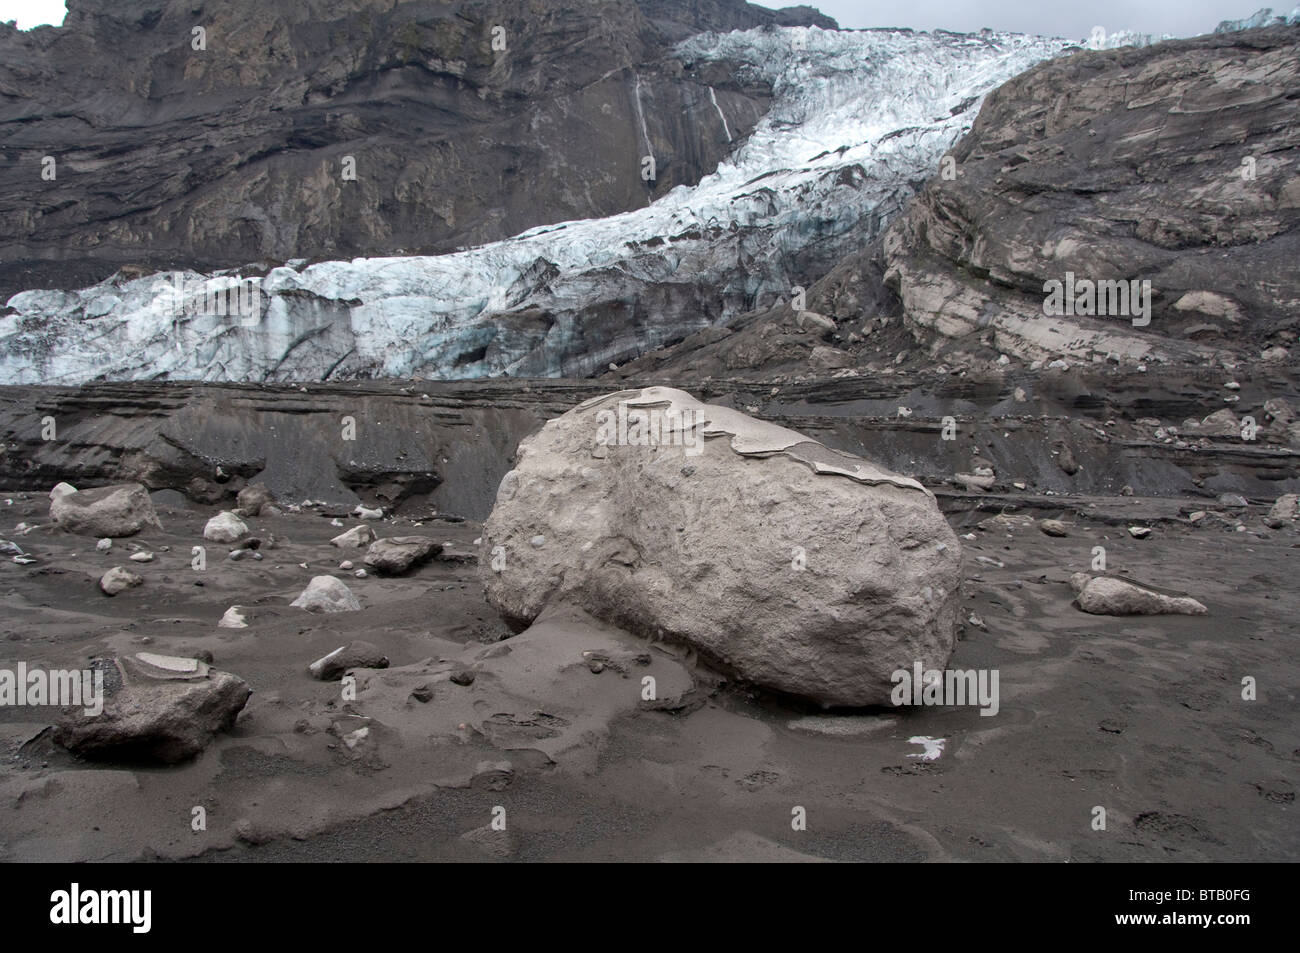 L'Islanda, Porsmork Park, ghiacciaio Gigjokull dopo la molla 2010 eruzione del vulcano Eyjafjallajokull. Foto Stock